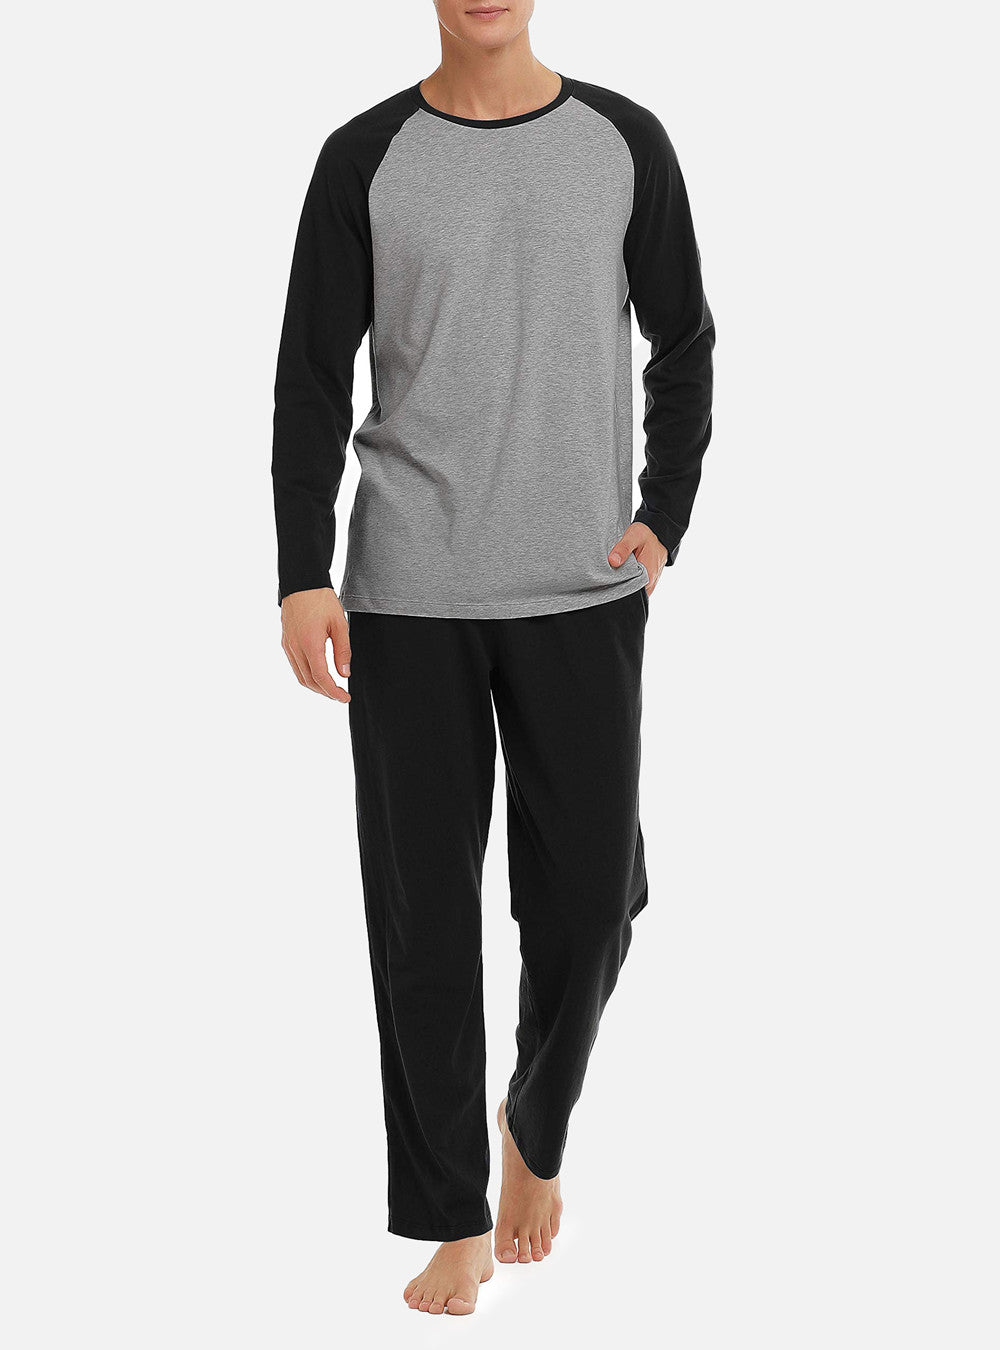 Pajama Lounge Set Cotton With Side Pockets David Archy Long Sleeve Raglan  Top and Bottom